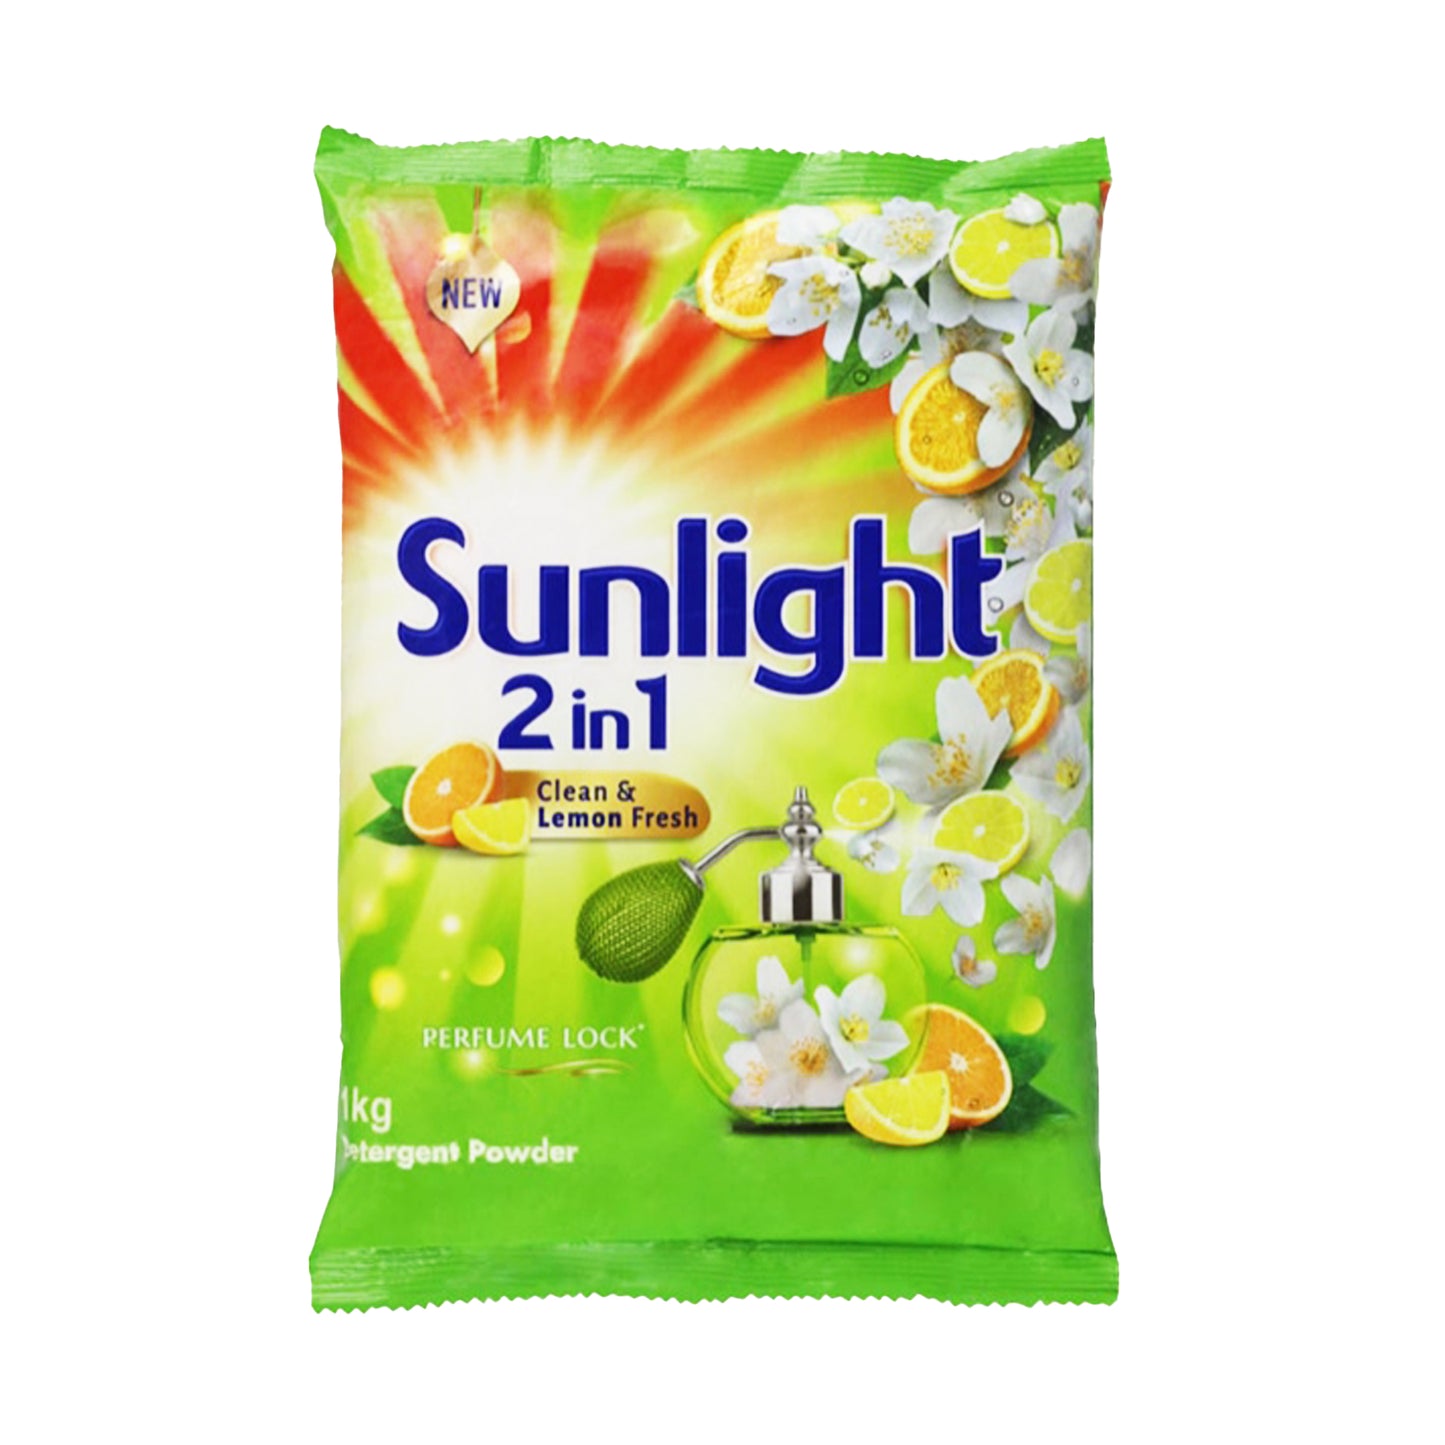 Sunlight Clean & Lemon Fresh Detergent Powder (1kg)